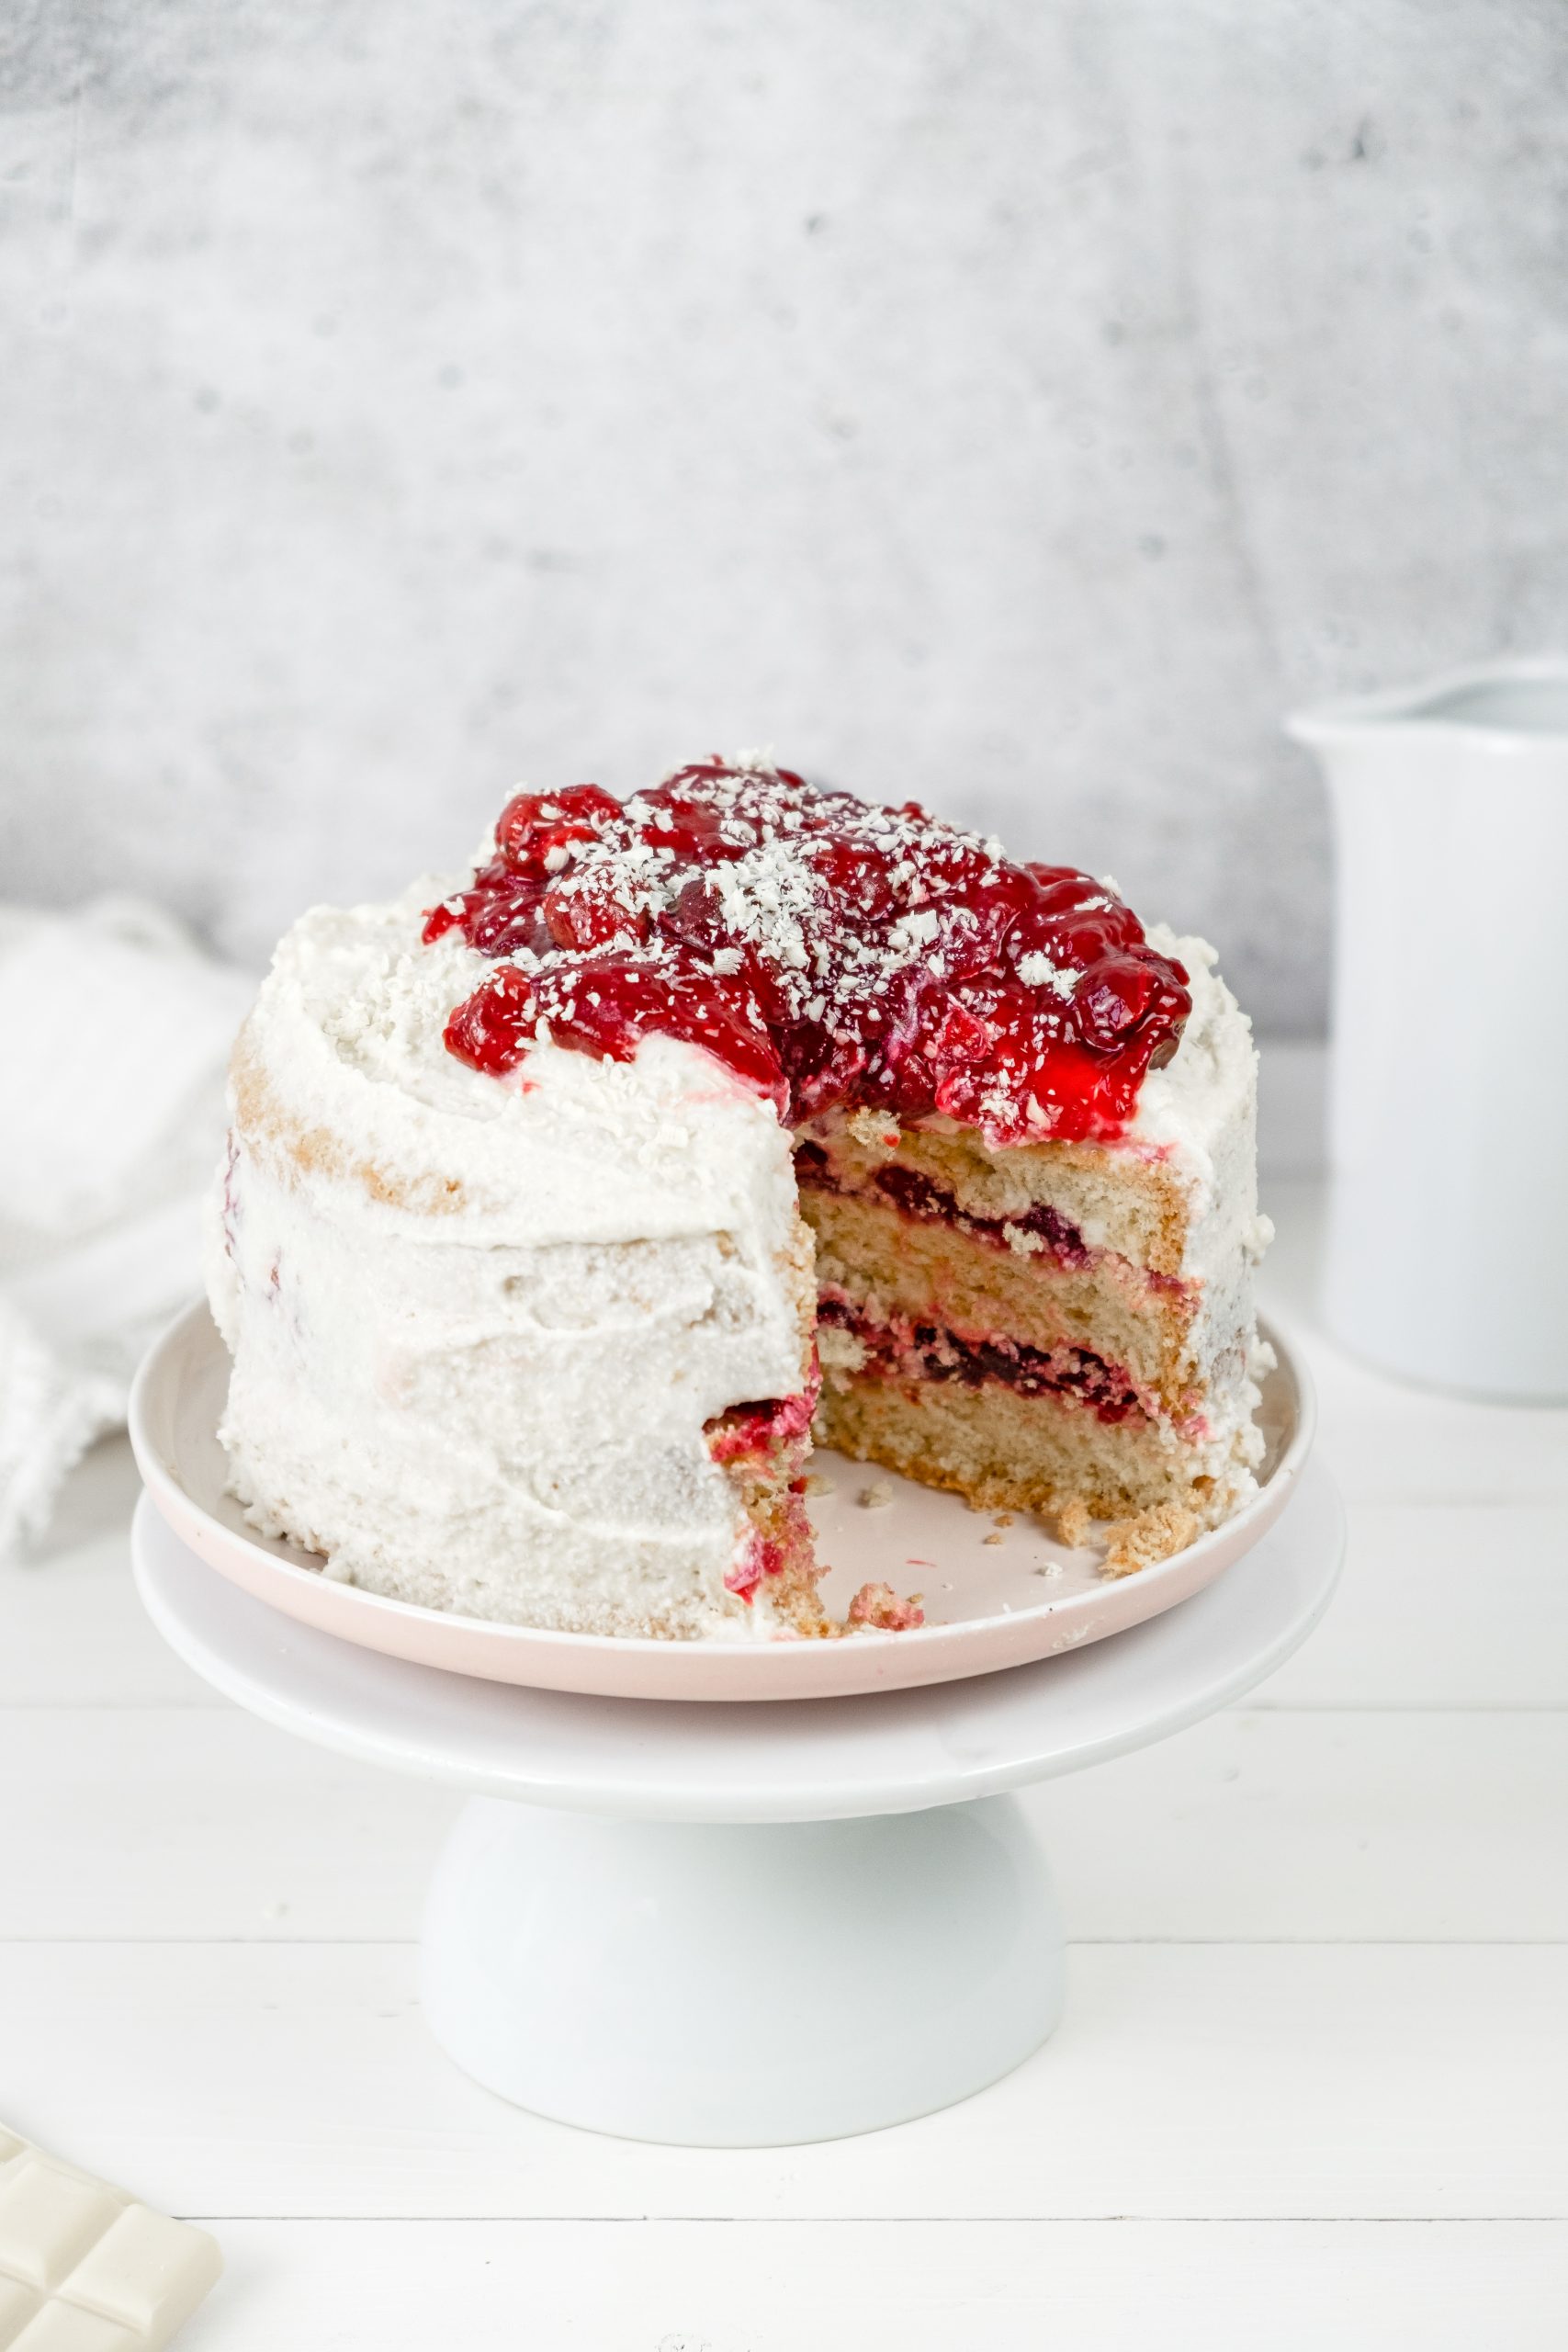 Black Forest Cake Pictures | Download Free Images on Unsplash